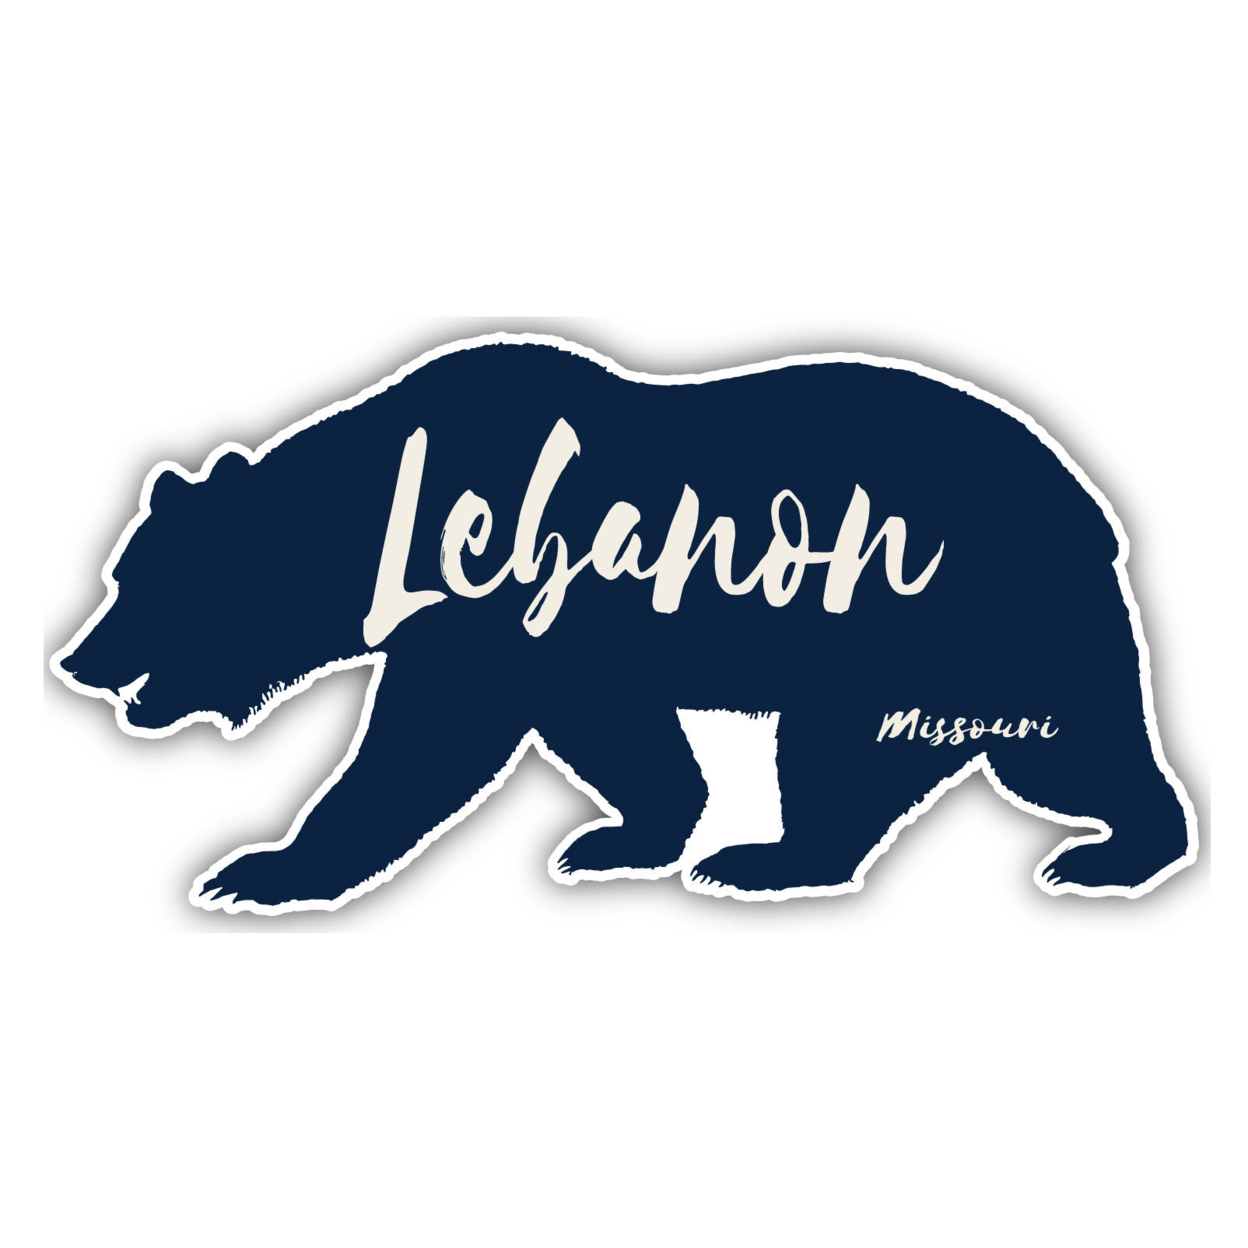 Lebanon Missouri Souvenir Decorative Stickers (Choose Theme And Size) - 4-Inch, Camp Life